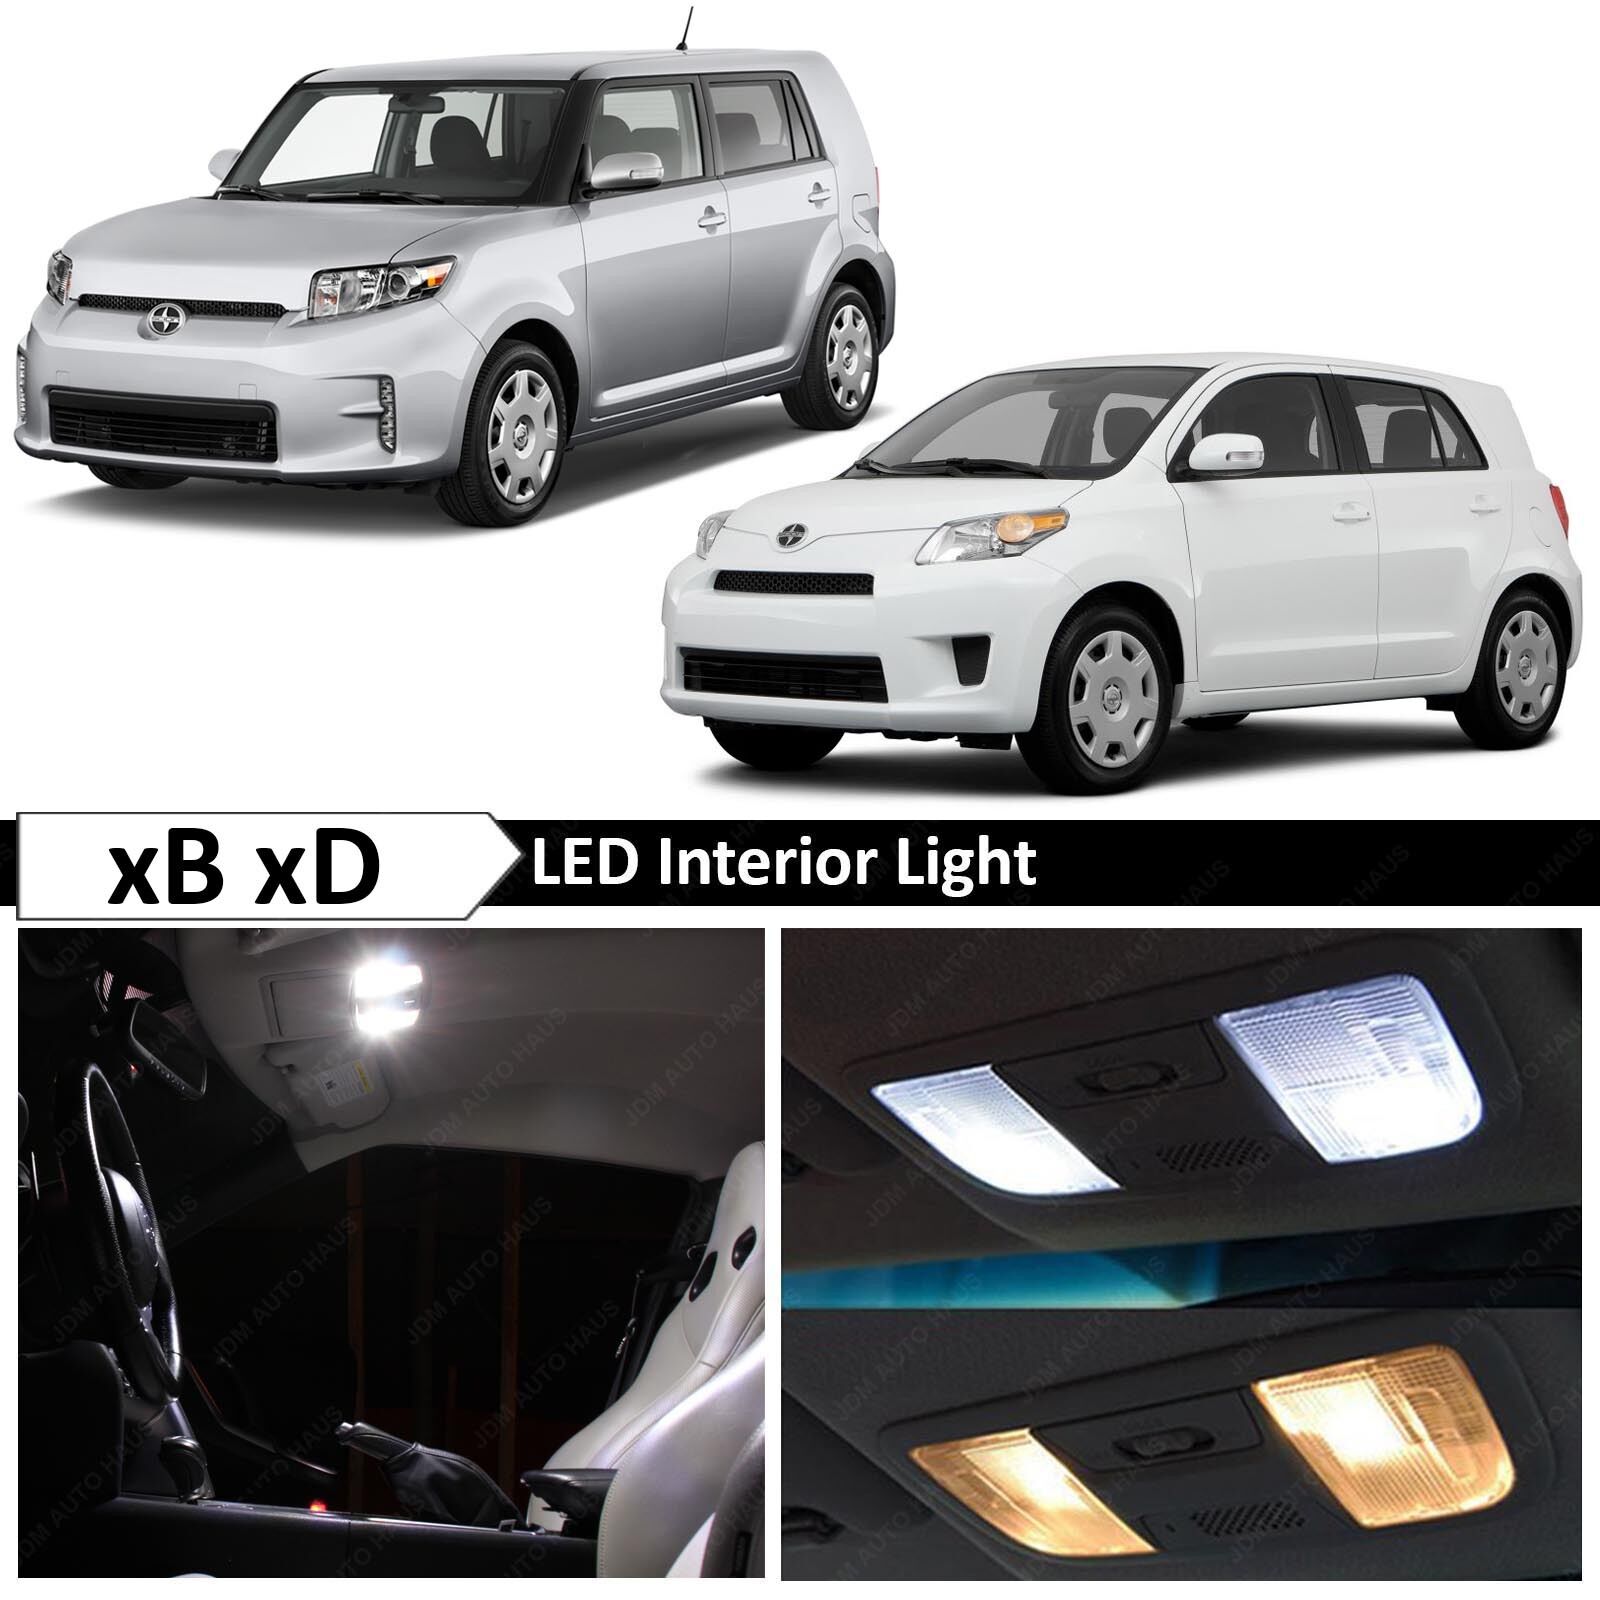 8x White LED Interior Lights Package Kit for 2008 - 2015 Scion xB xD